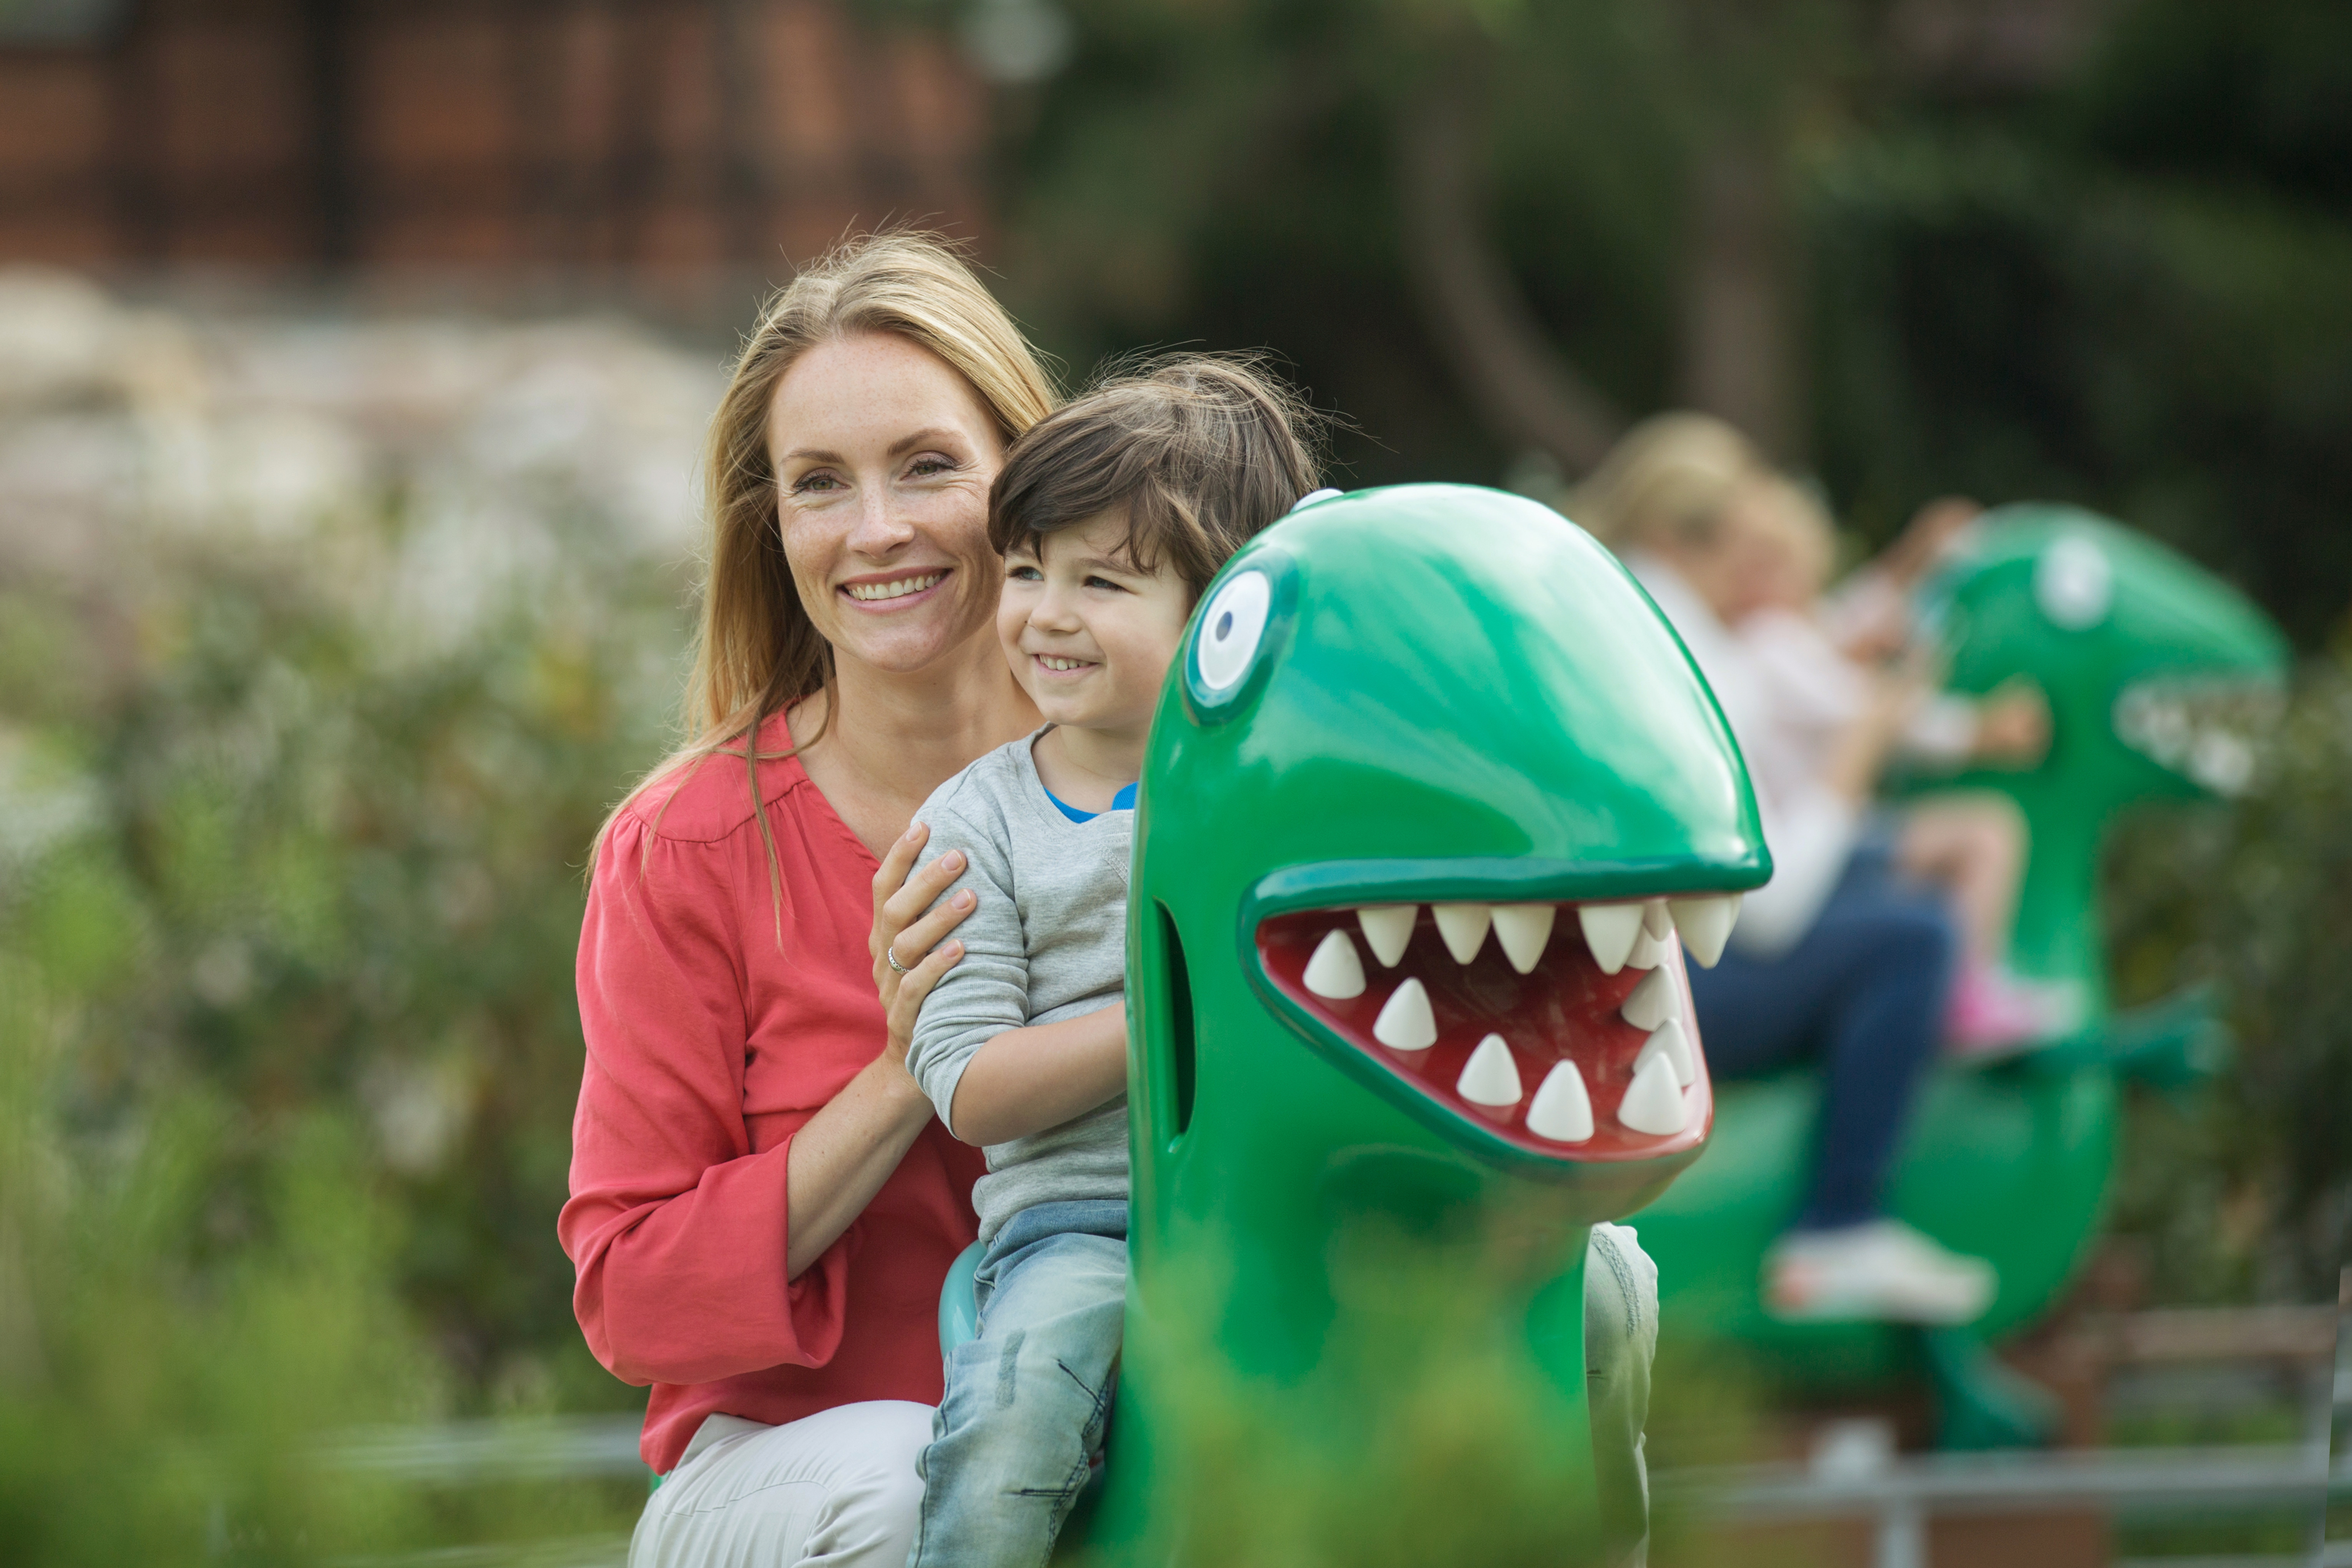 Heide Park Resort: Schorsch Dino Abenteuer